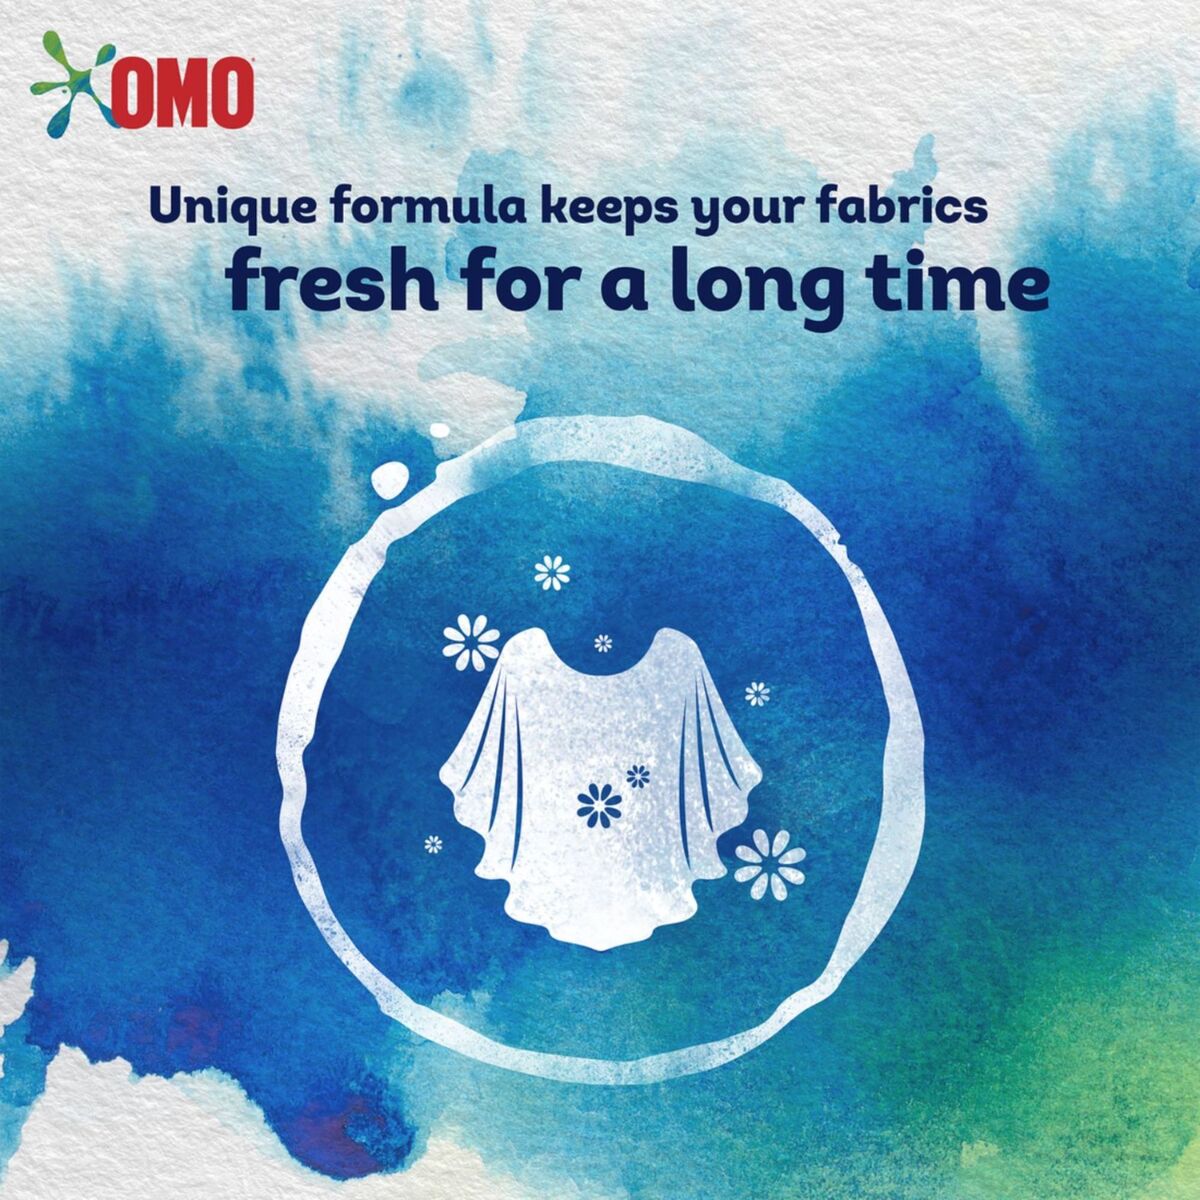 Omo Semi-Automatic Anti-Bacterial Washing Powder, 1.25 kg